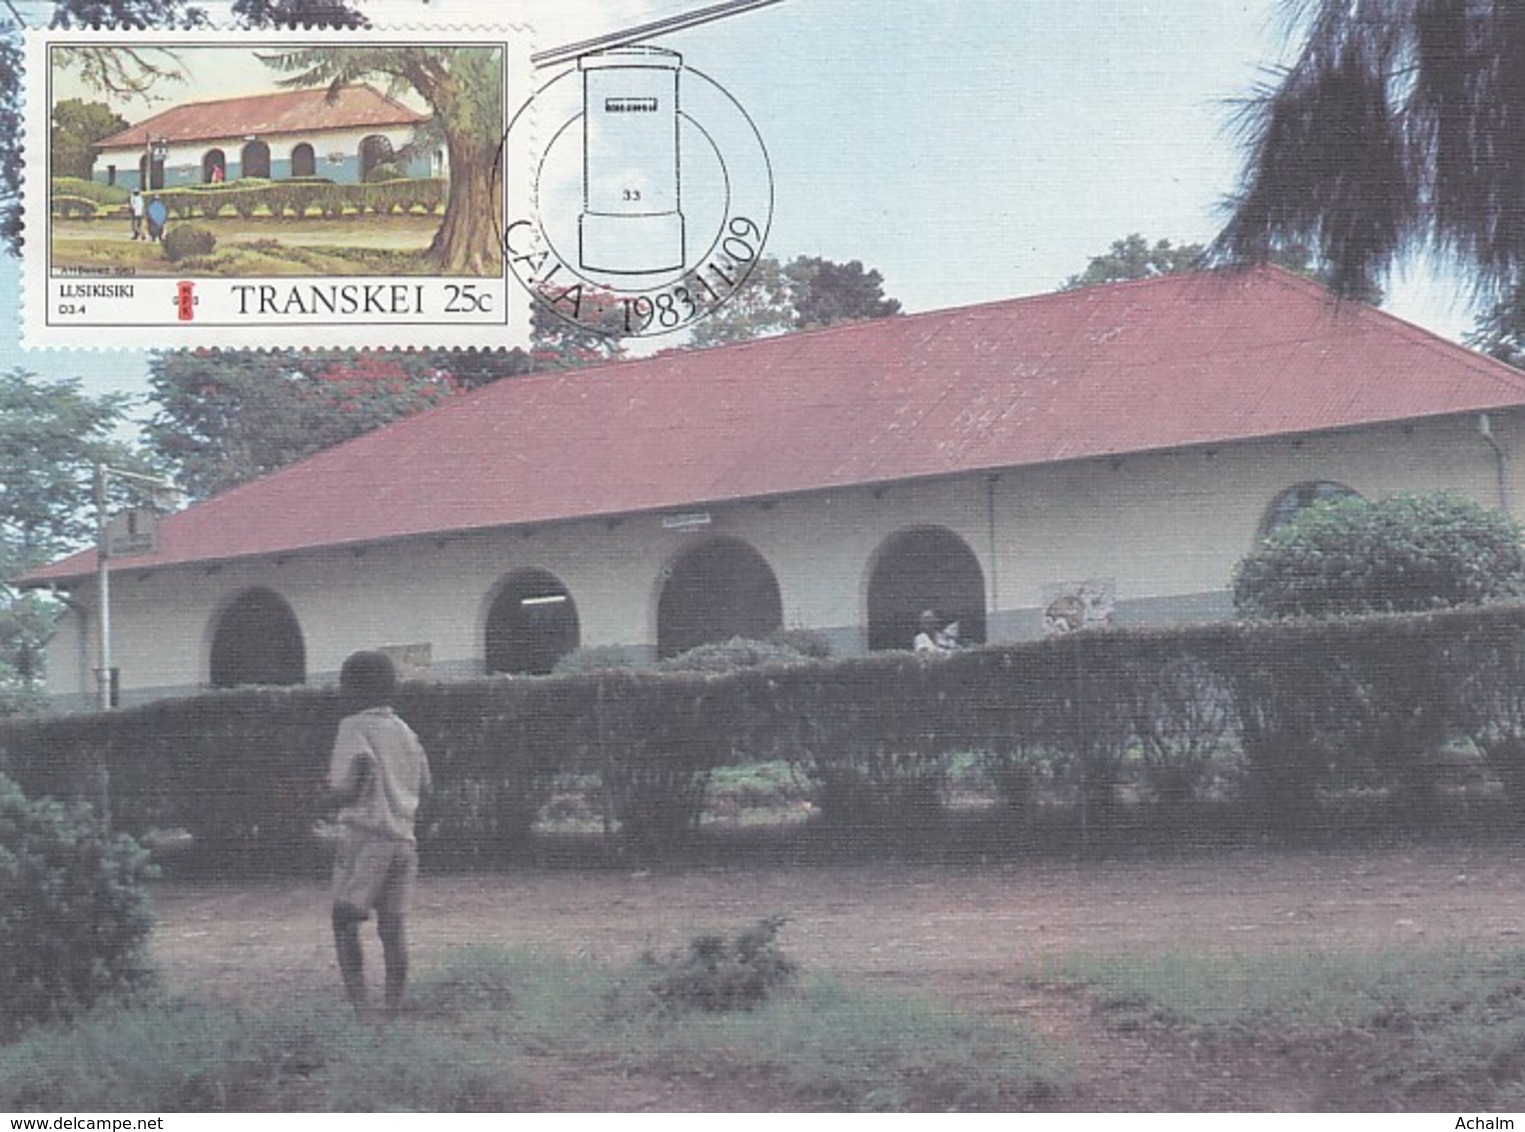 Transkei - Maximum Card Of 1983 - MiNr. 130 - Post Offices - Lusikisiki - Transkei